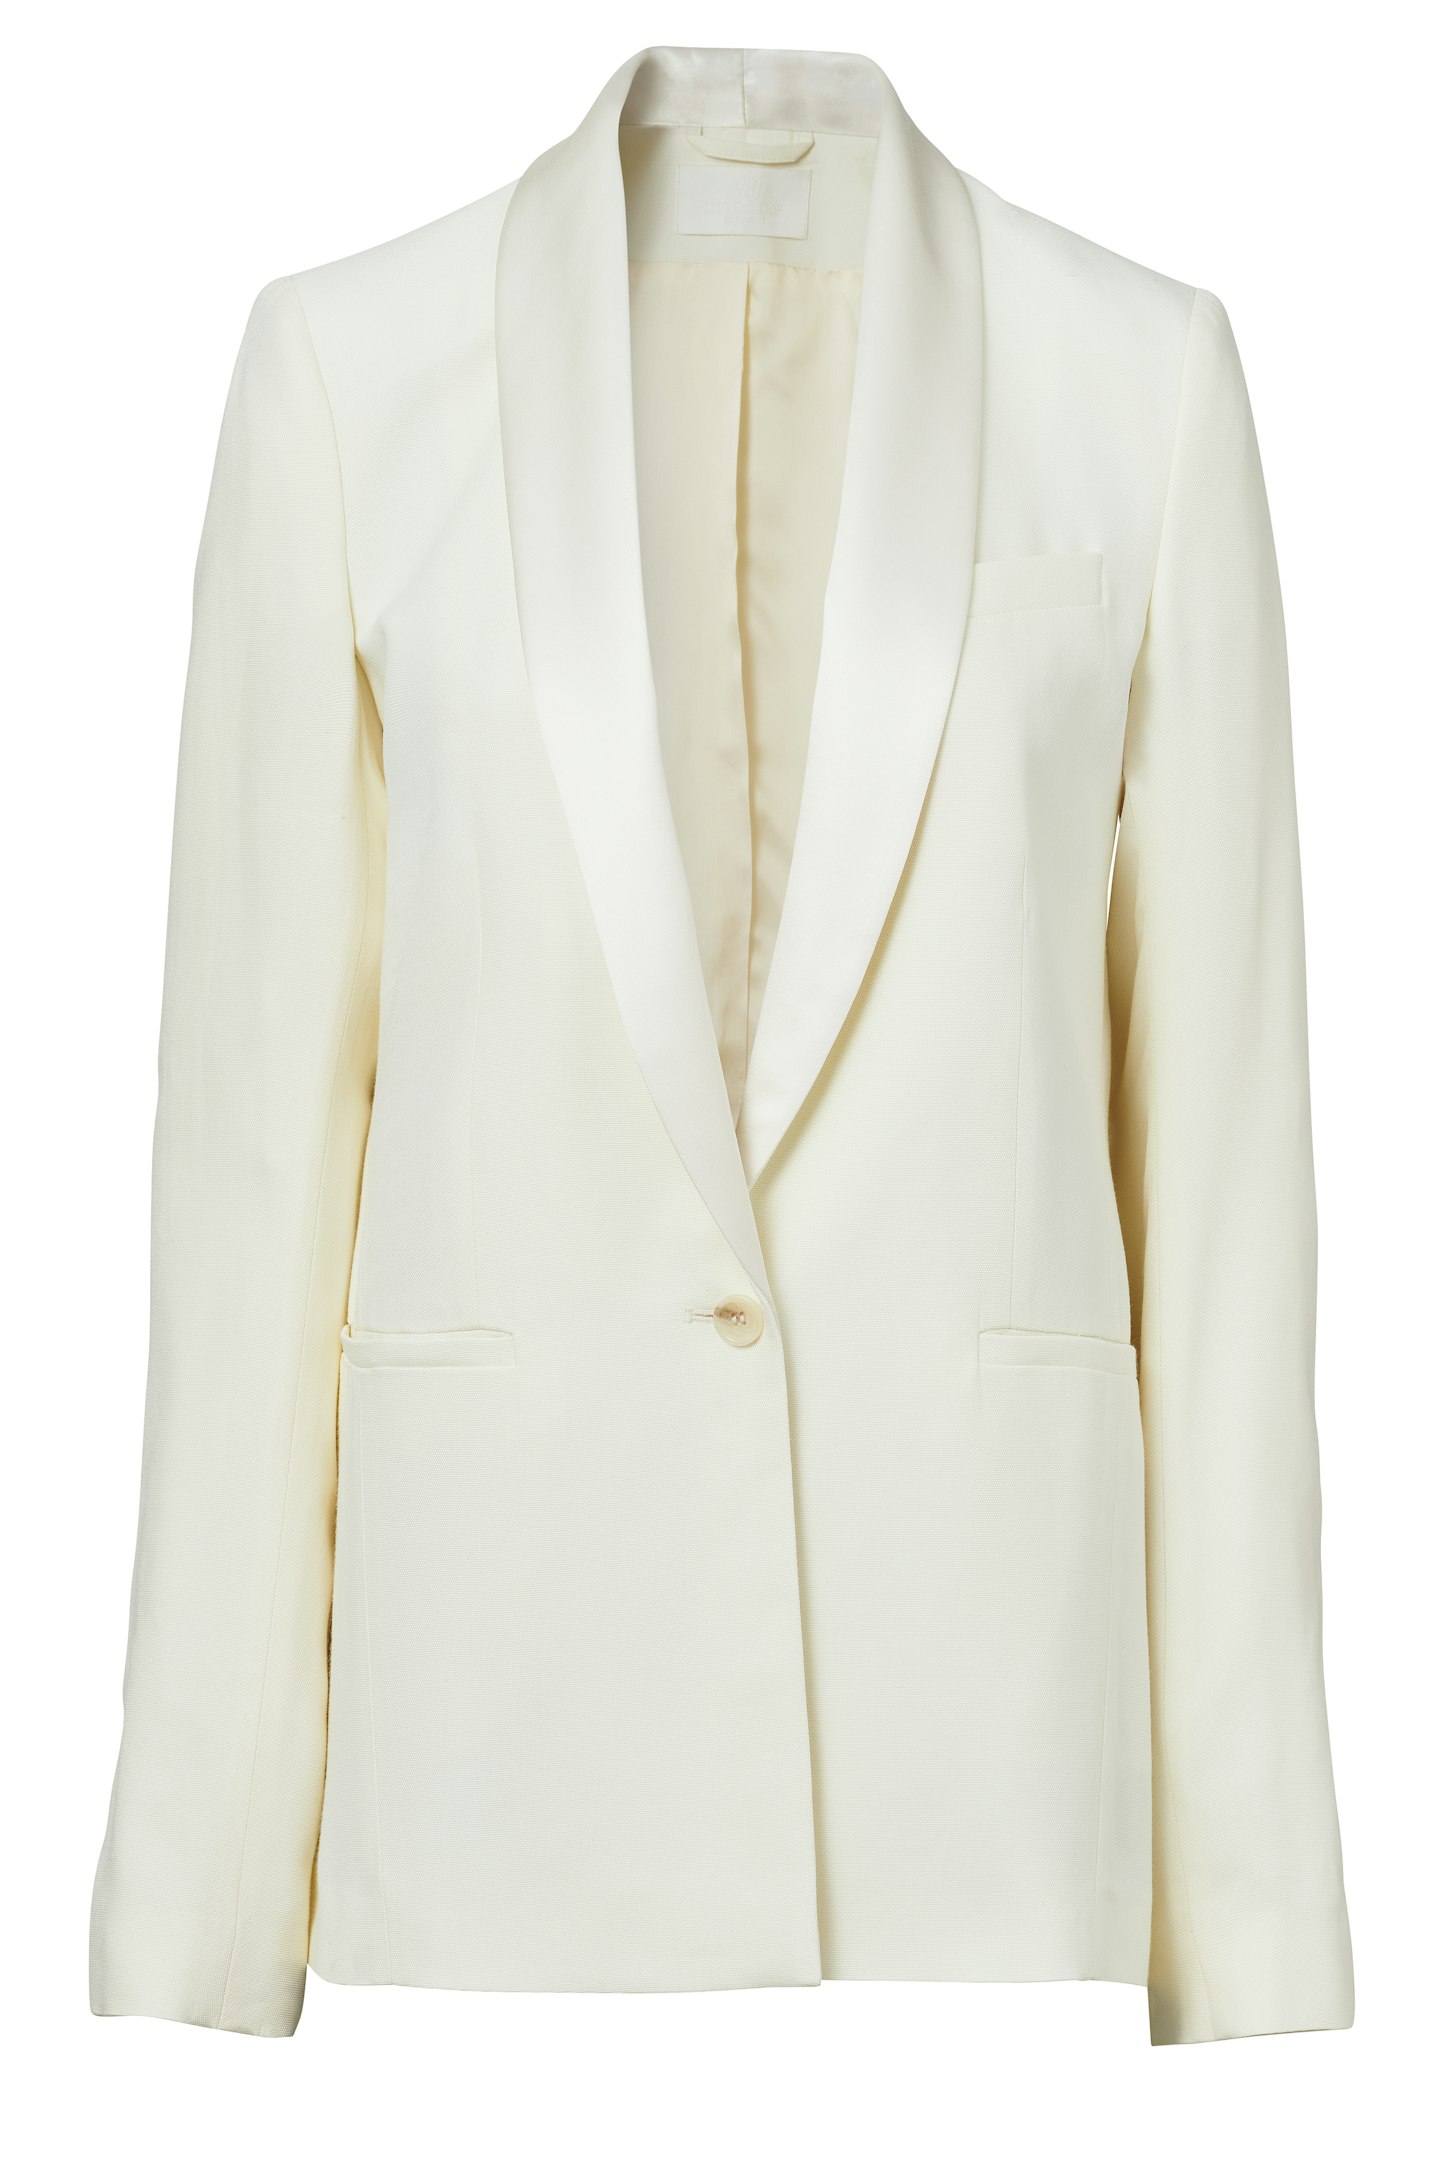 Linen-Blend Jacket, £99.99